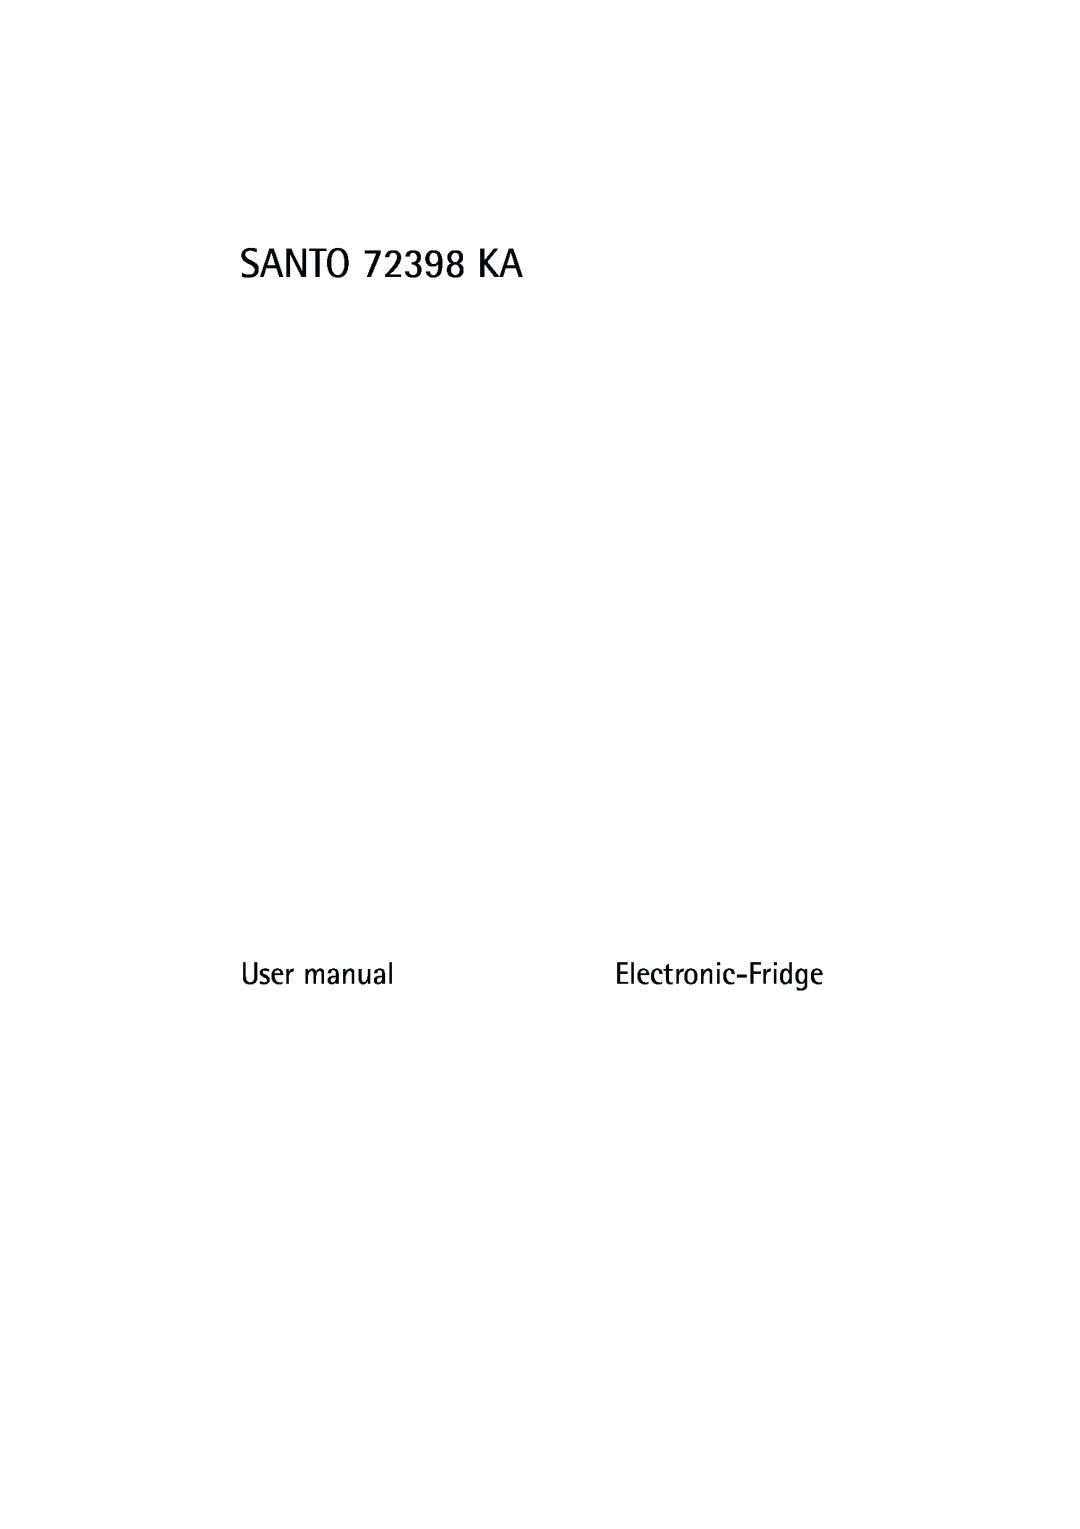 Electrolux user manual SANTO 72398 KA, User manual, Electronic-Fridge 